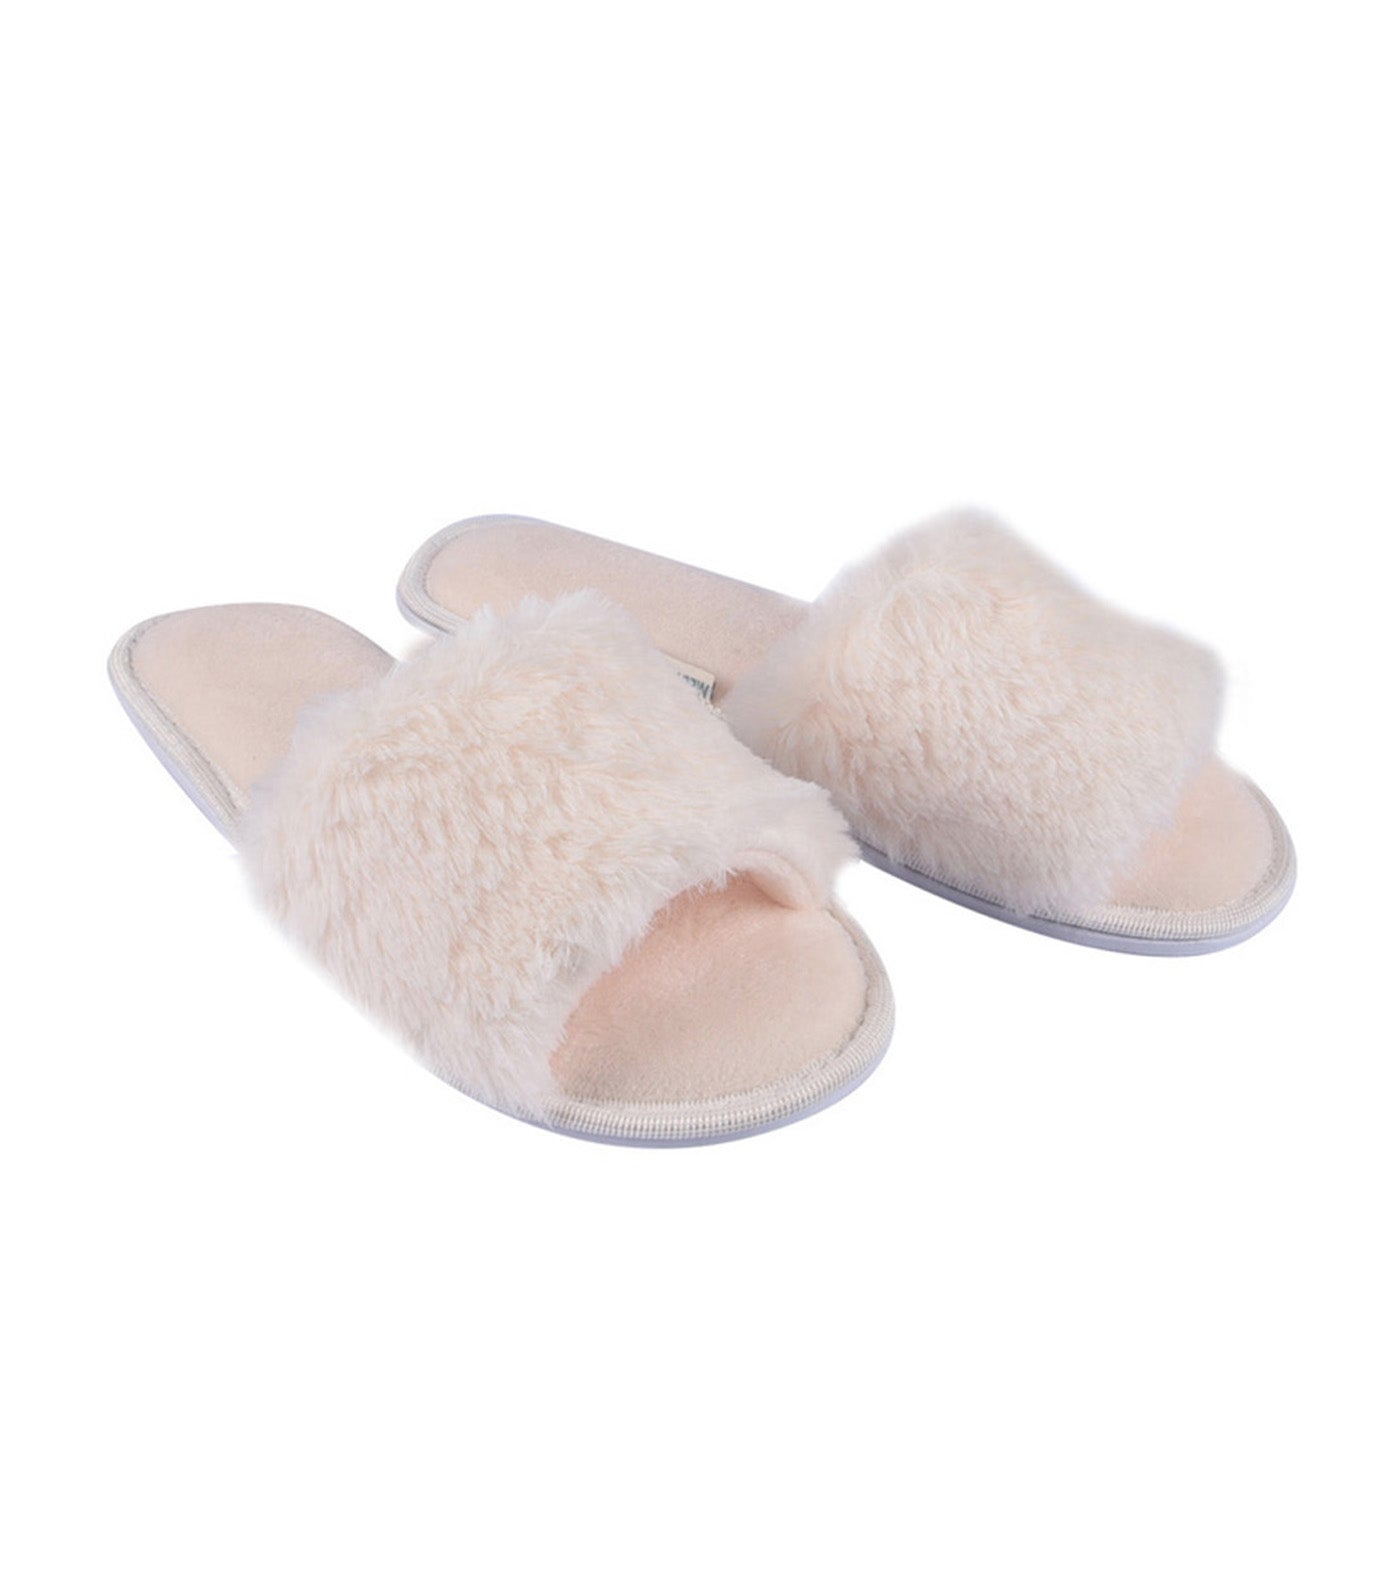 meet my feet off white ava slippers